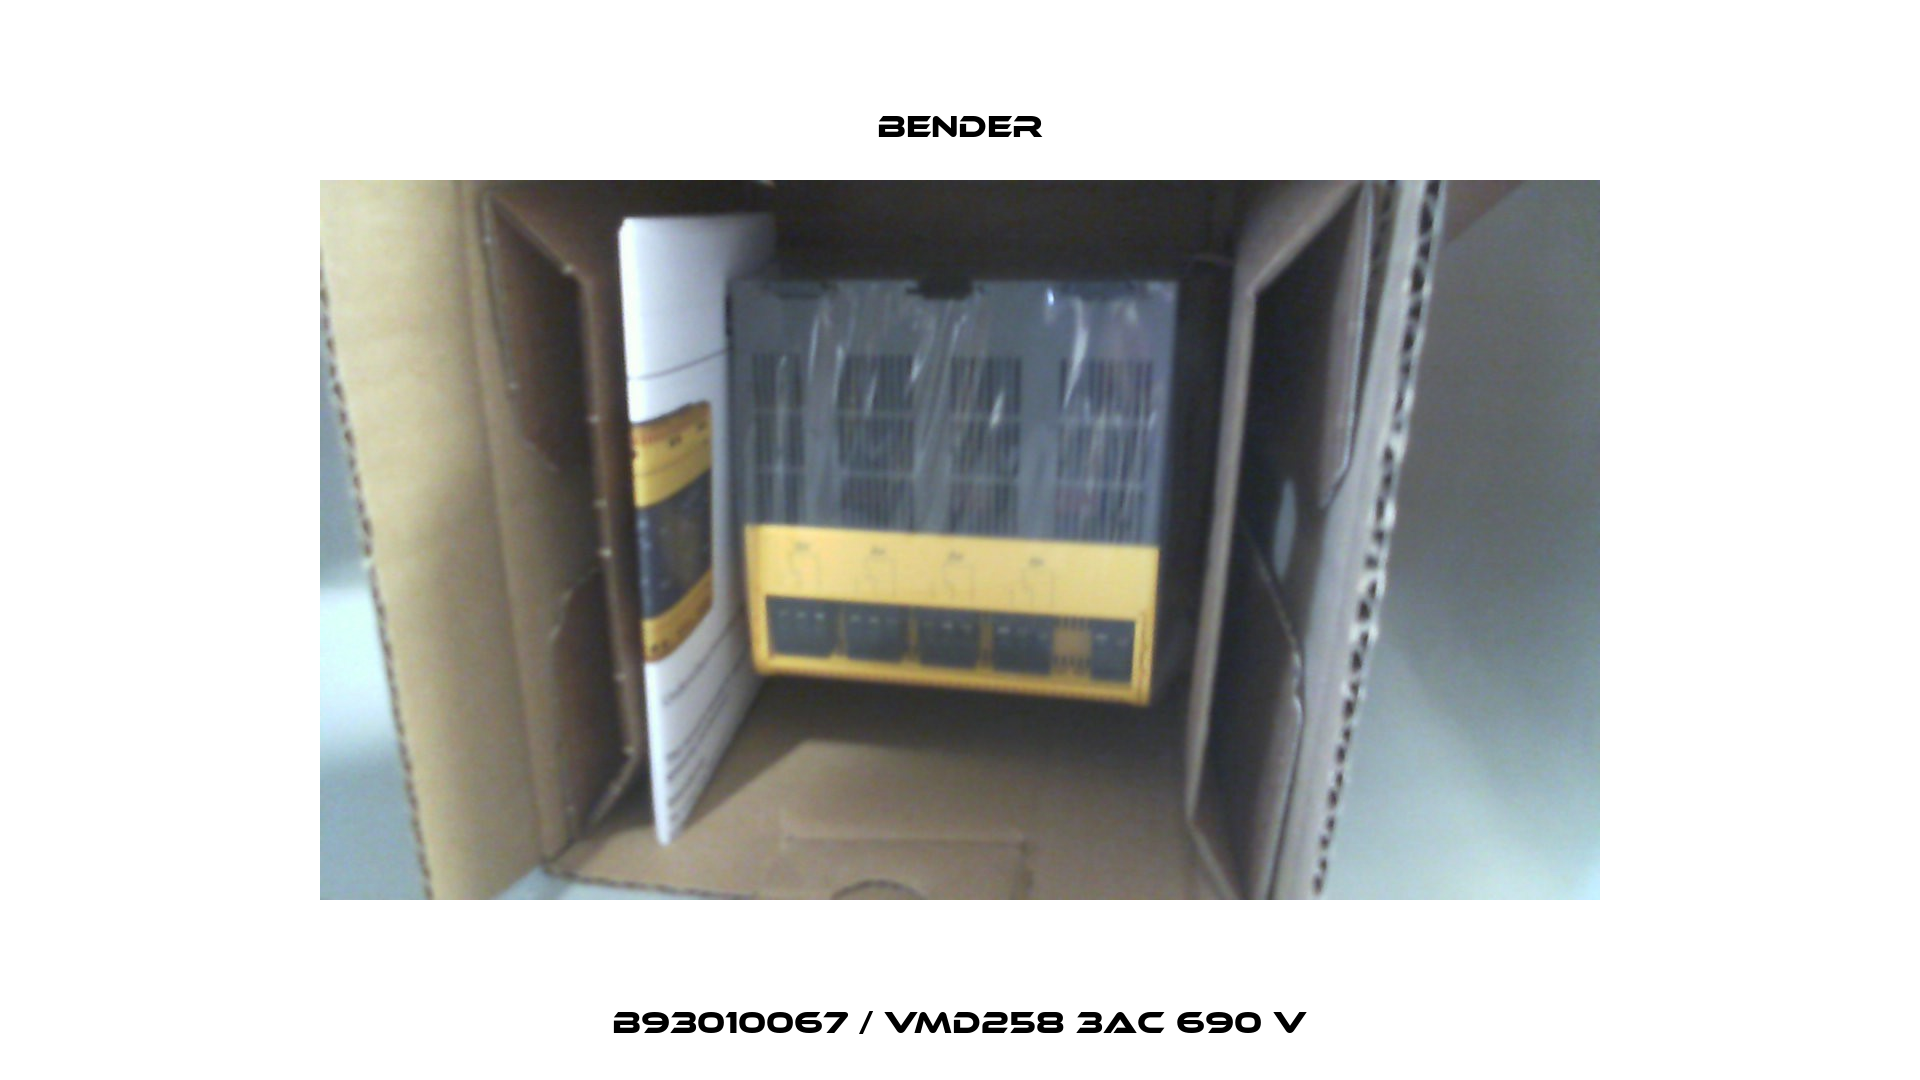 B93010067 / VMD258 3AC 690 V Bender